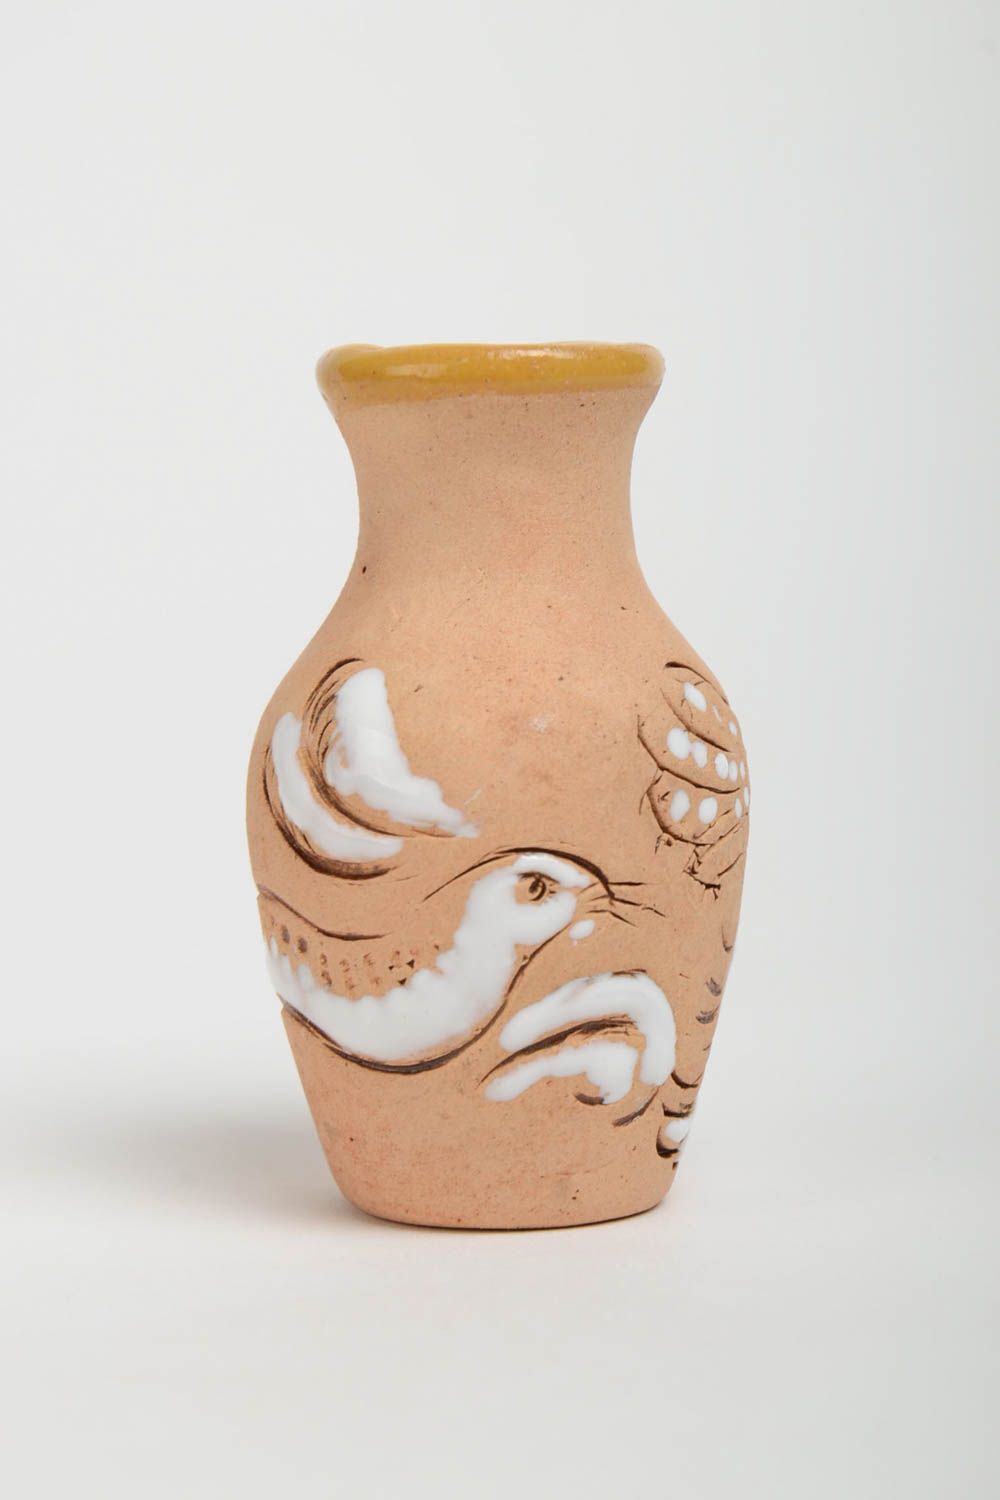 handmade shelf decorative pitcher figurine 0,02 lb photo 2